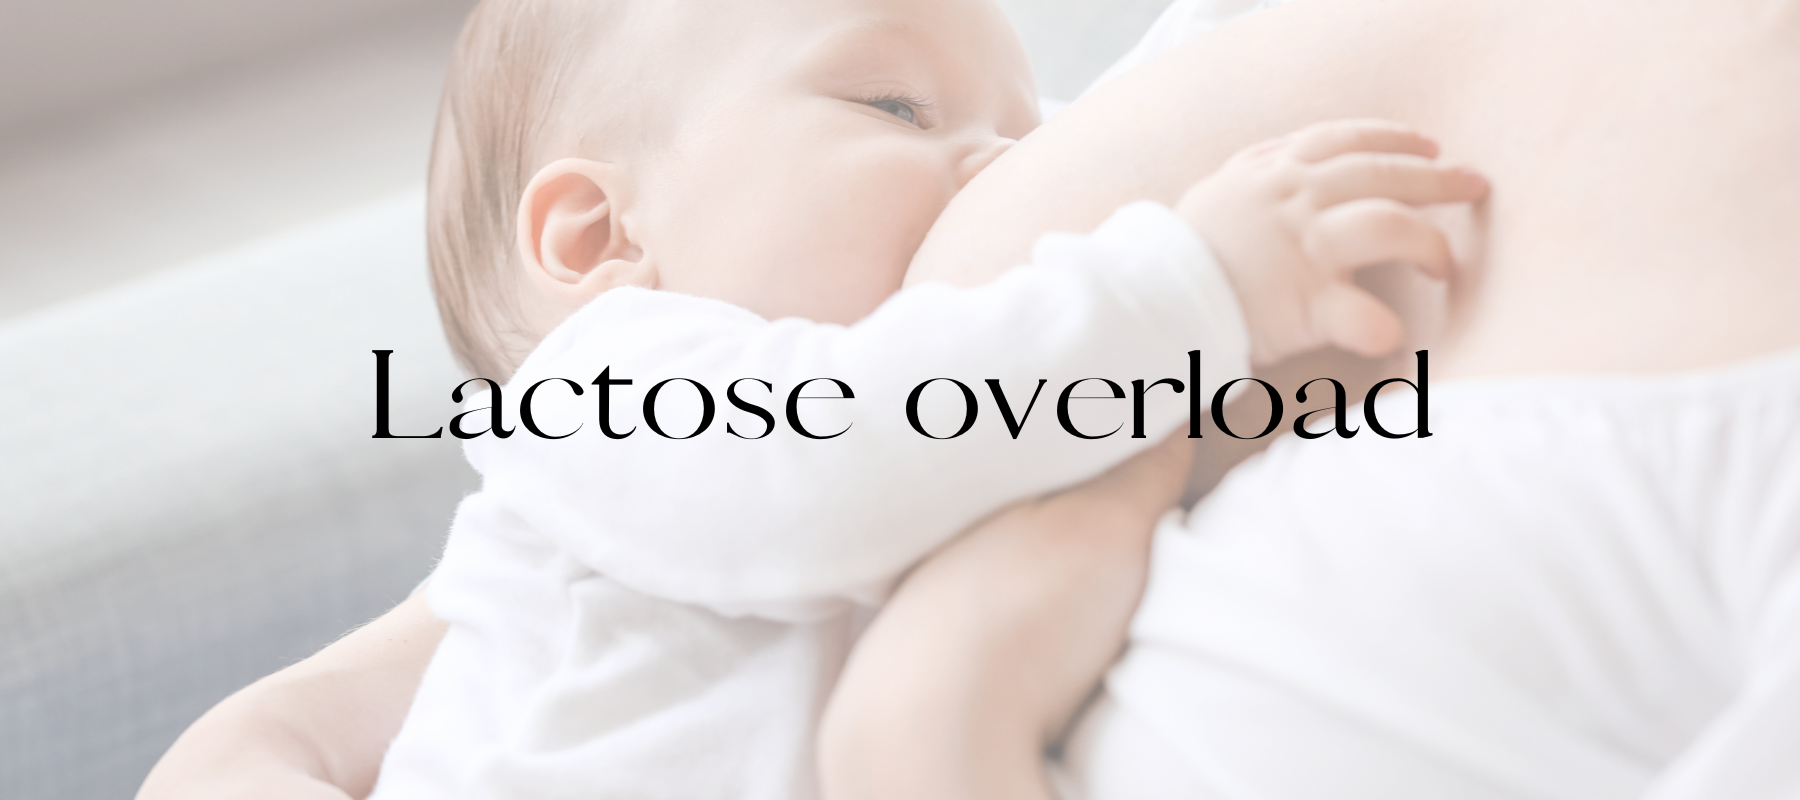 Lactose overload